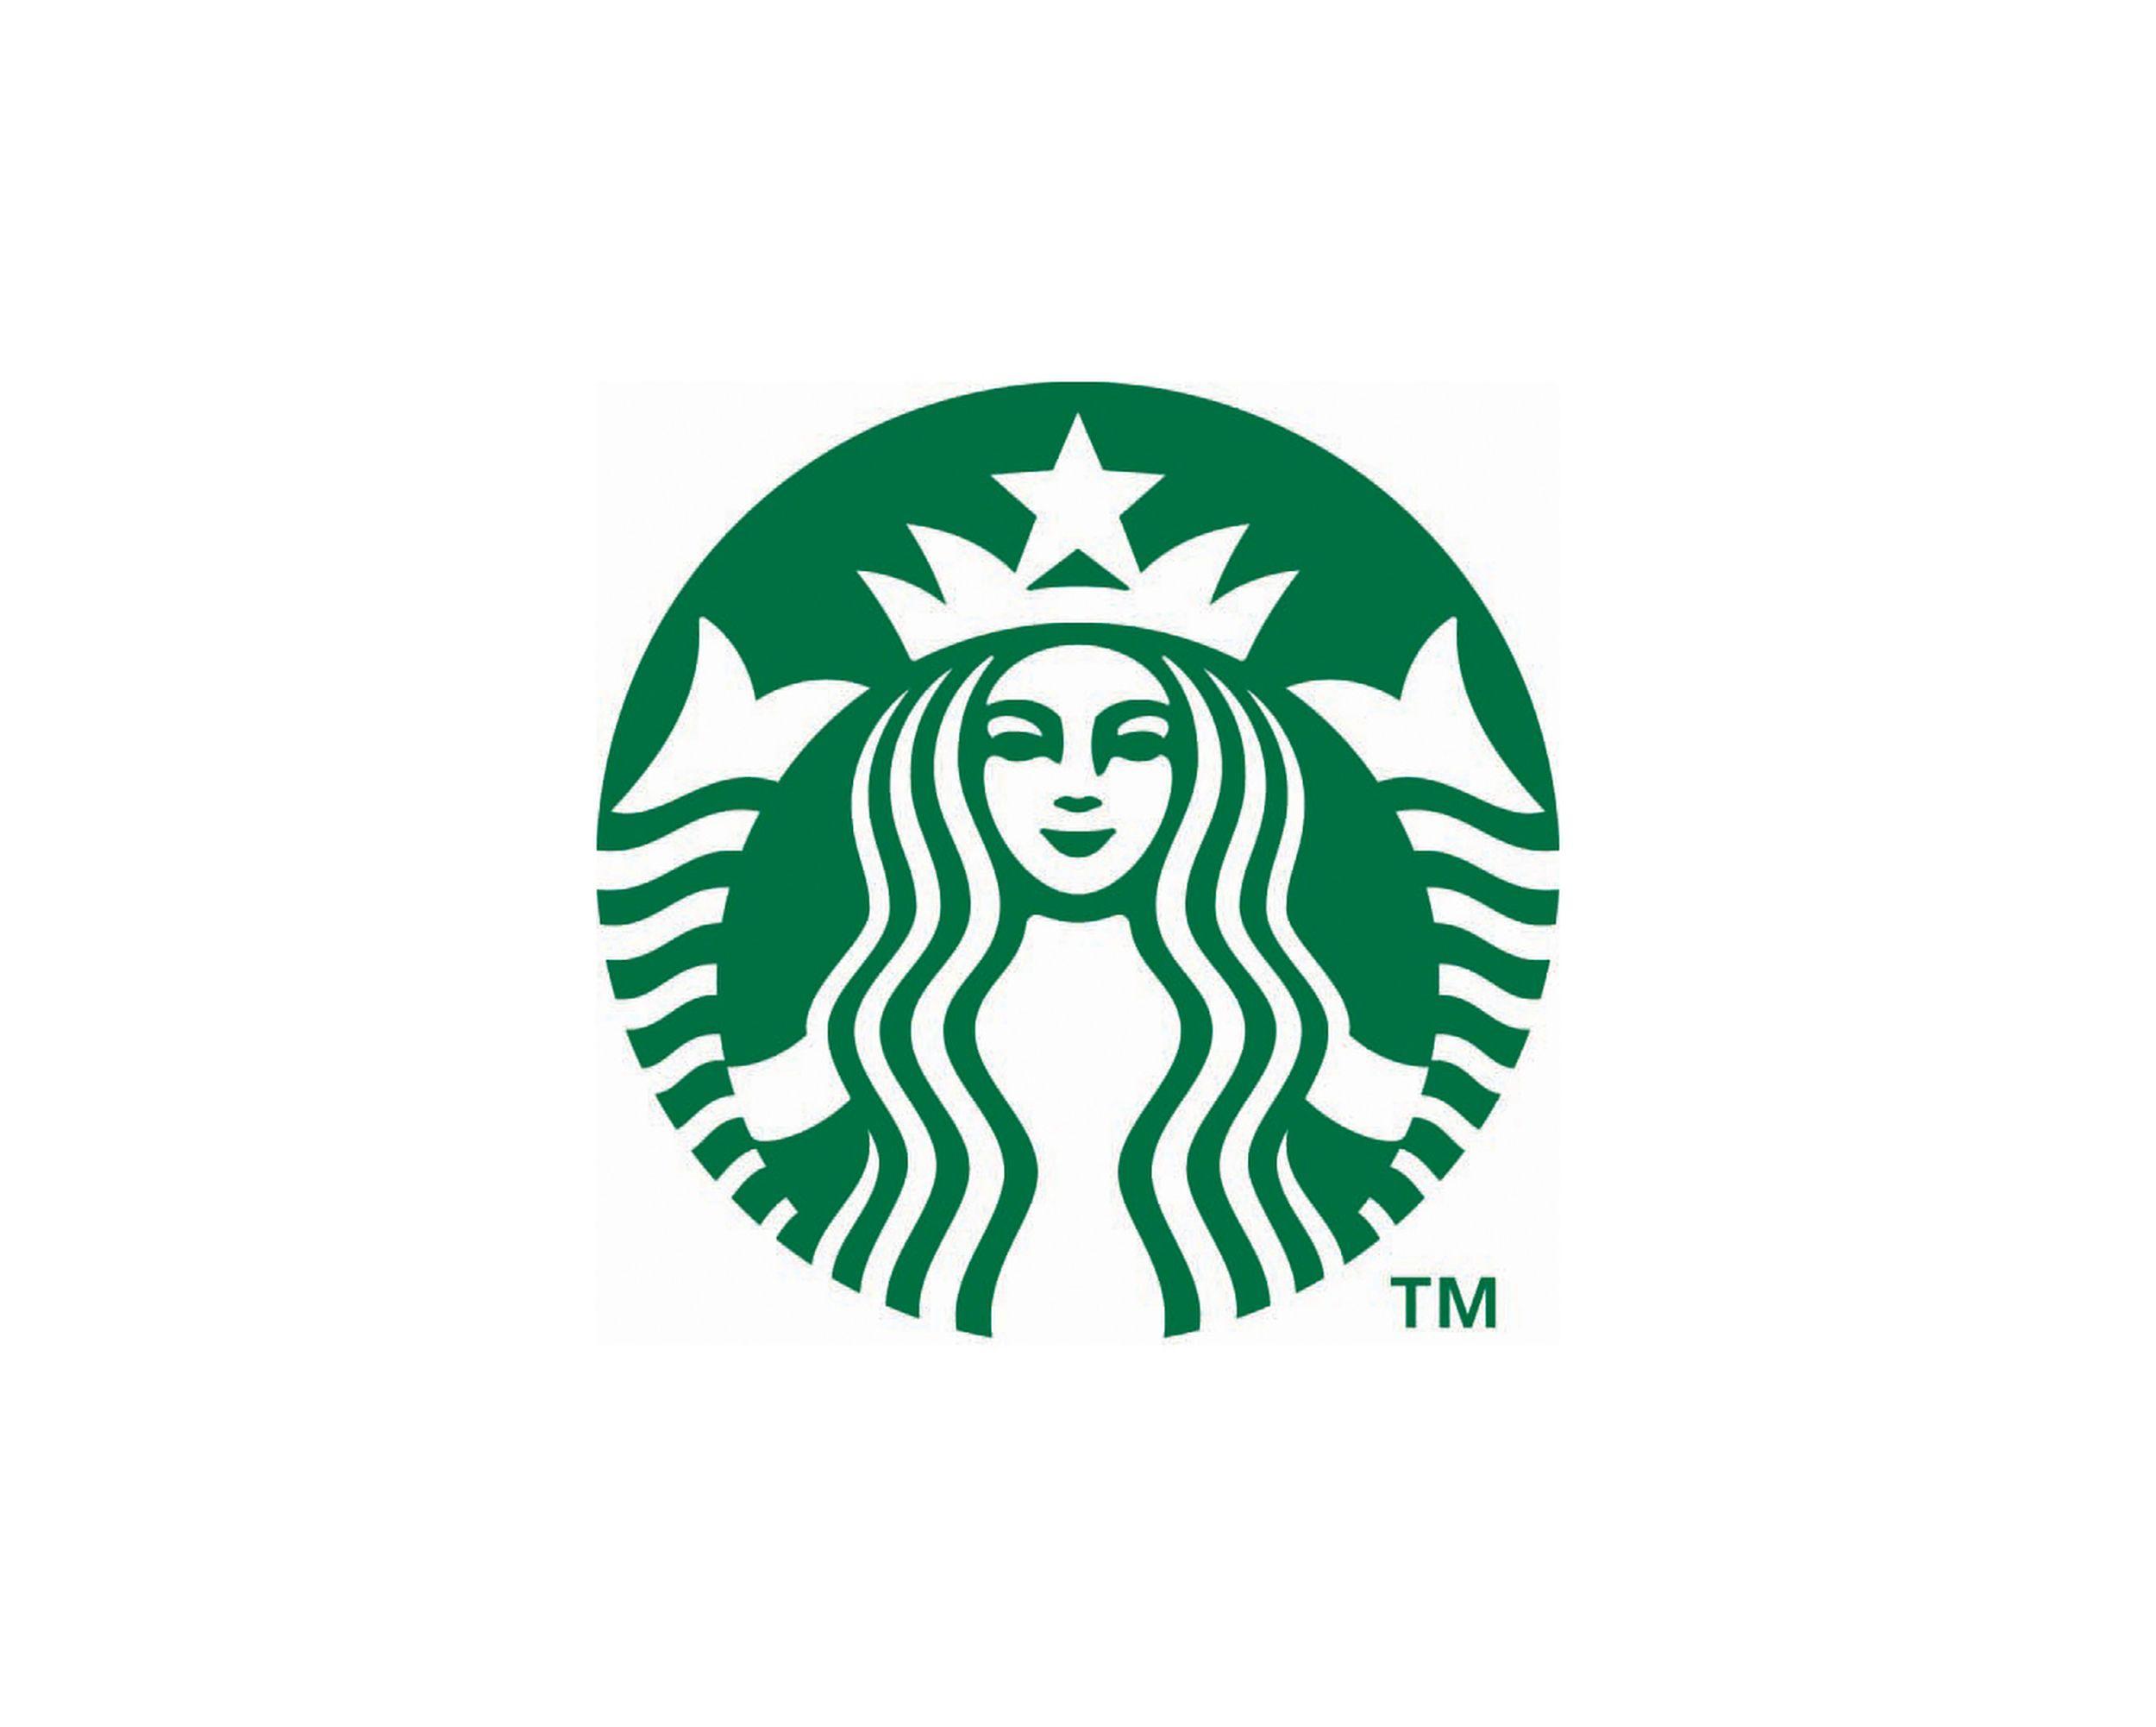 Official Starbucks Logo - Starbucks Stories to inspire and nurture the human spirit